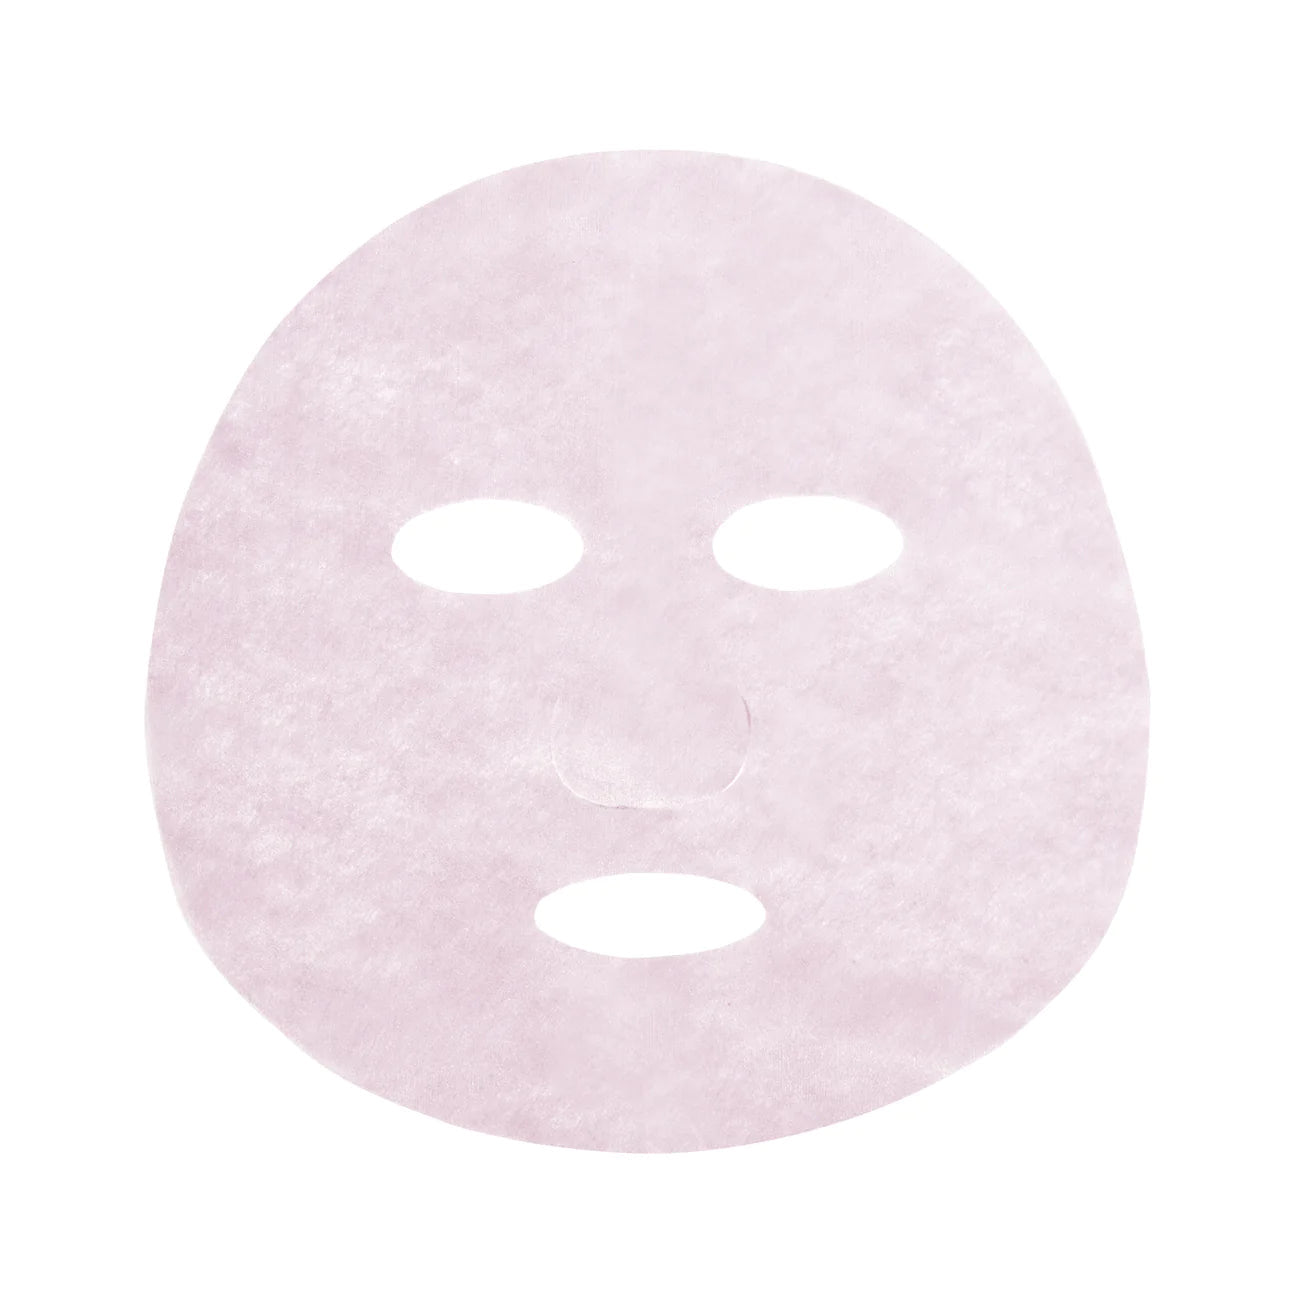 K SECRET calamine derma secret mask pink solution قناع ورقي بالكلاماين من كي سيكرت